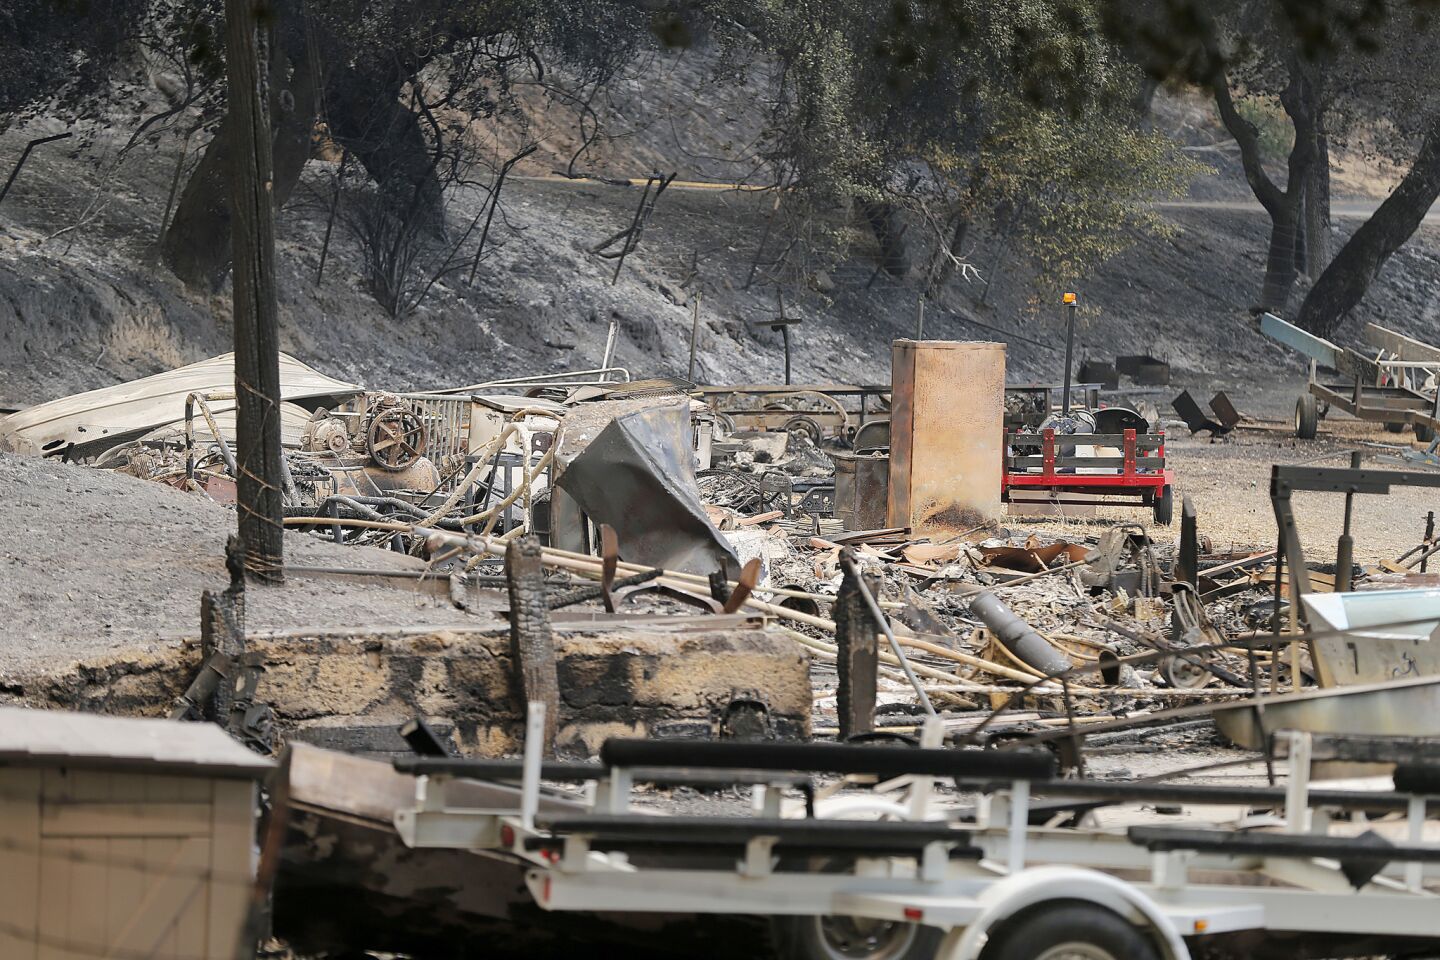 Wildfires across California